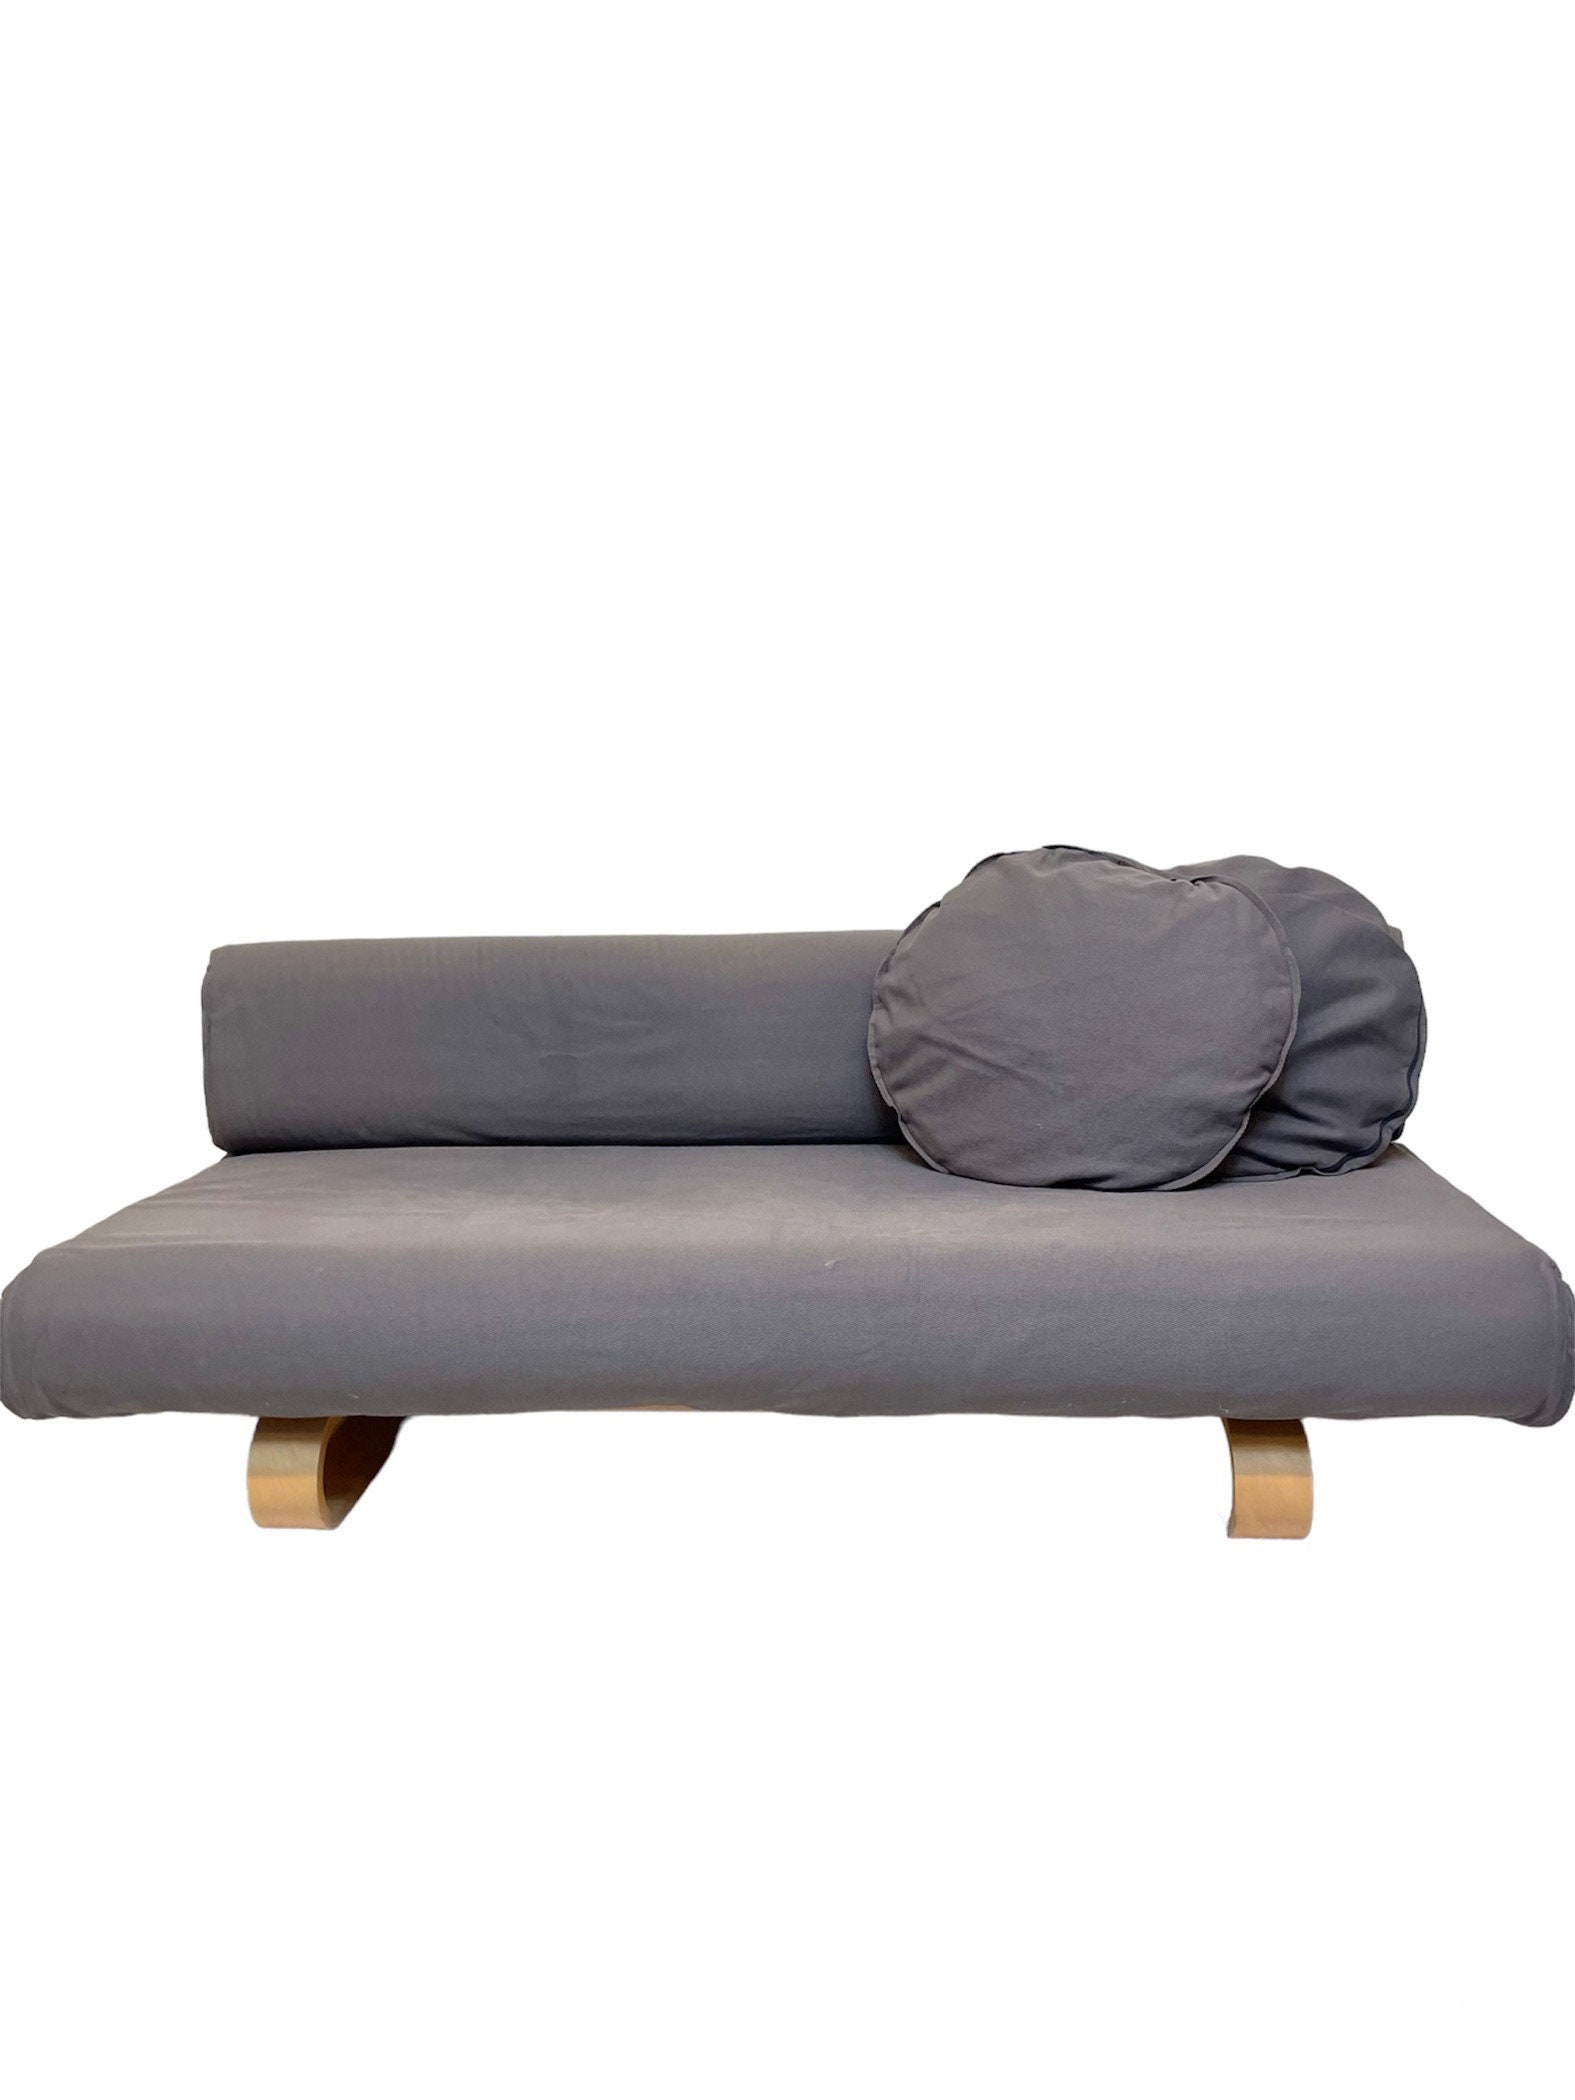 Trek selecteer Selectiekader Vintage IKEA Allerum Sofa Bed with Gray Slipcover and Throw - Etsy België